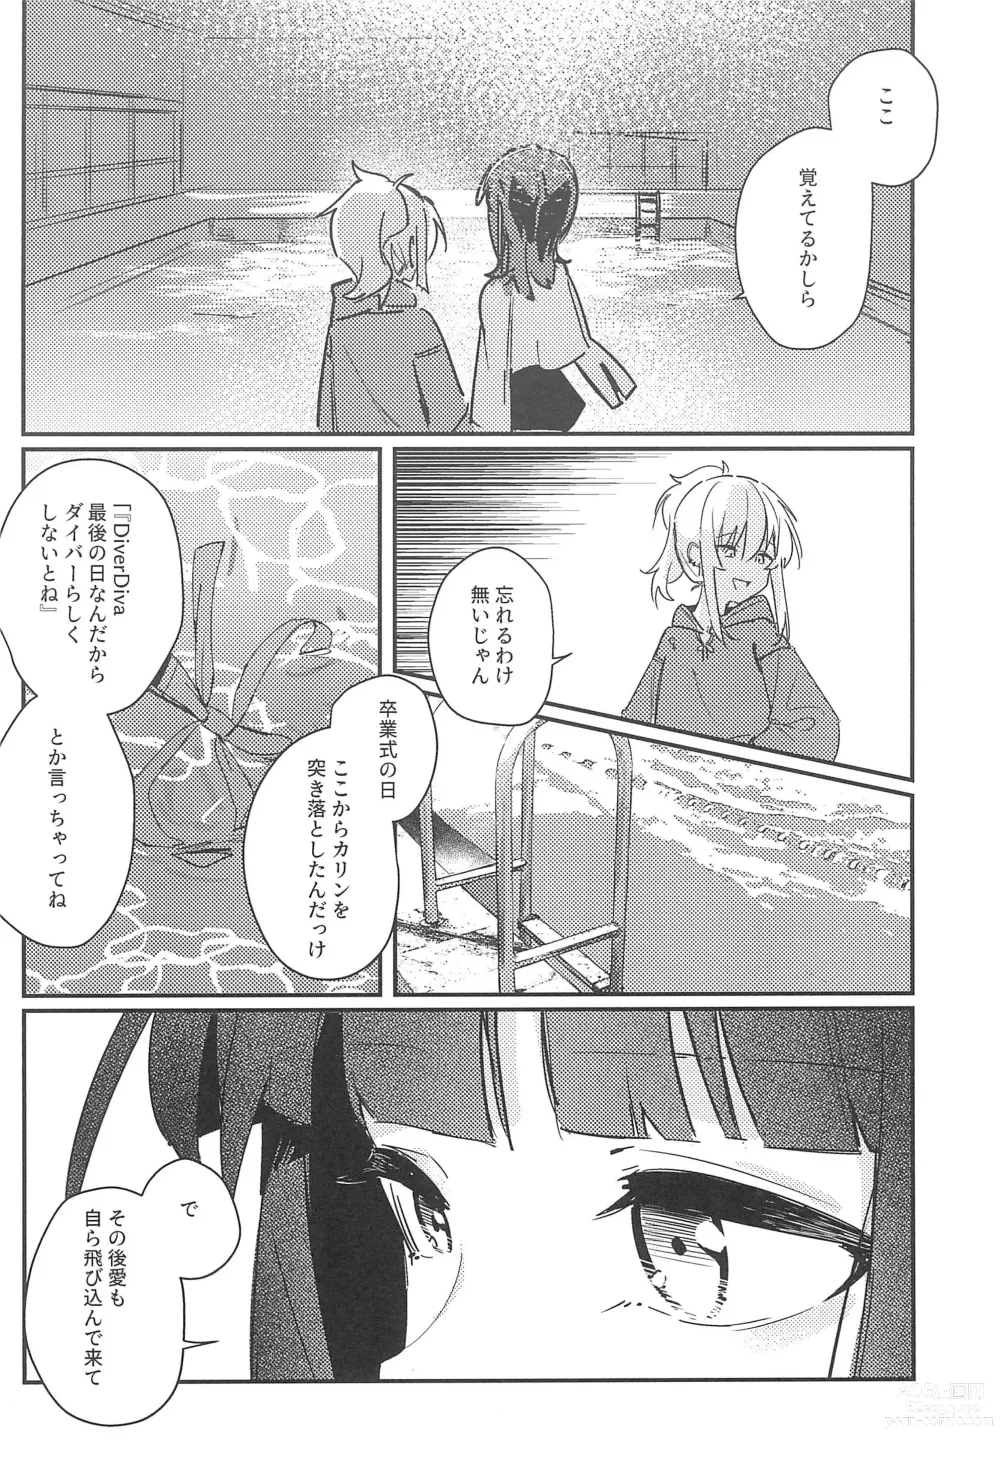 Page 18 of doujinshi MIRROR